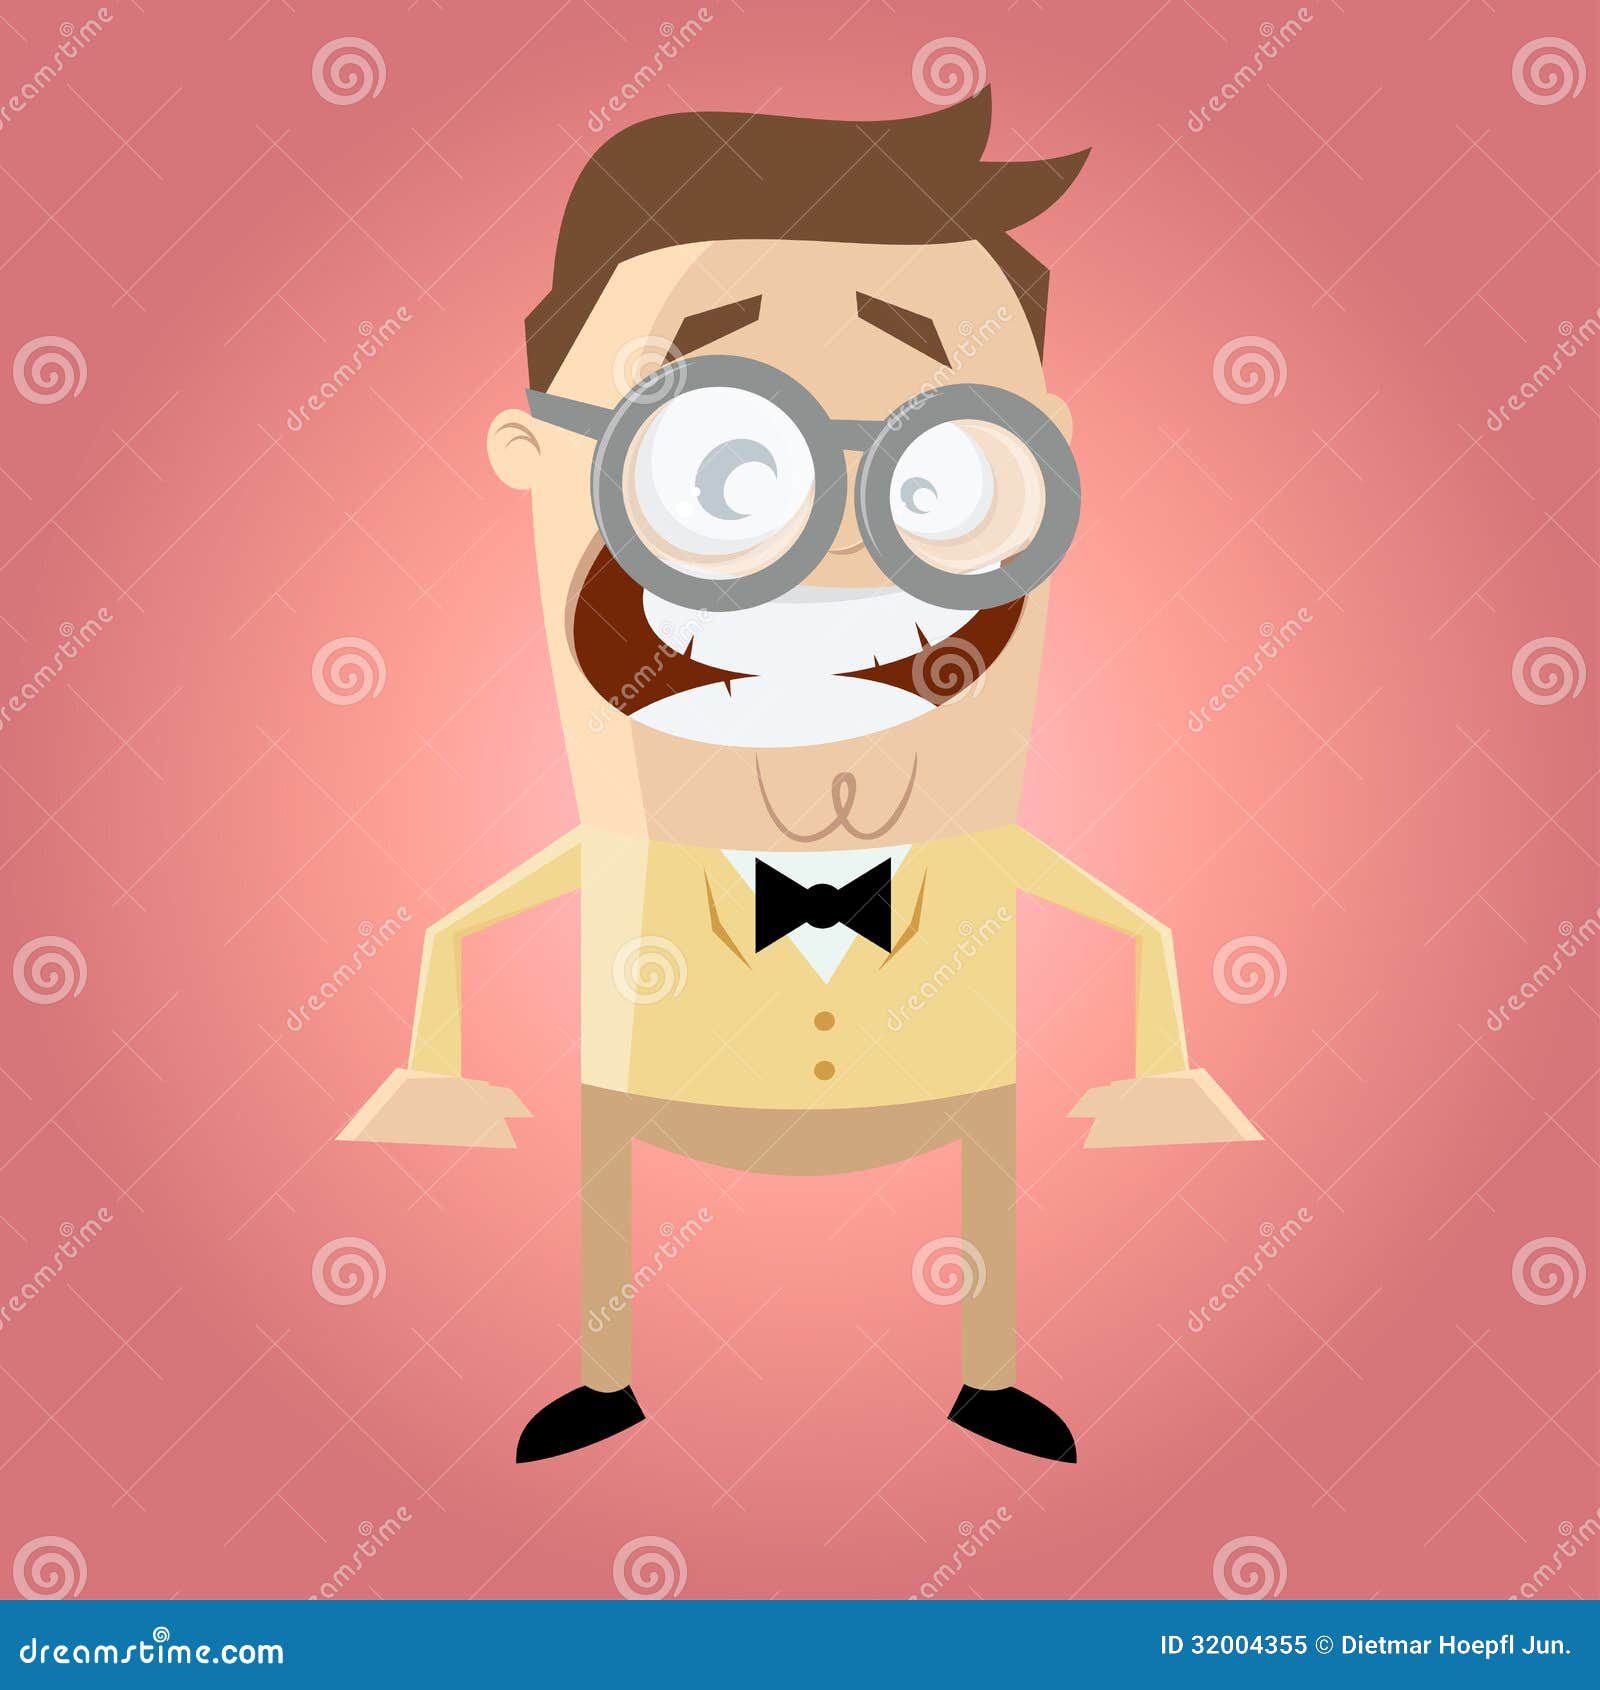 Funny cartoon nerd stock vector. Illustration of glasses - 32004355